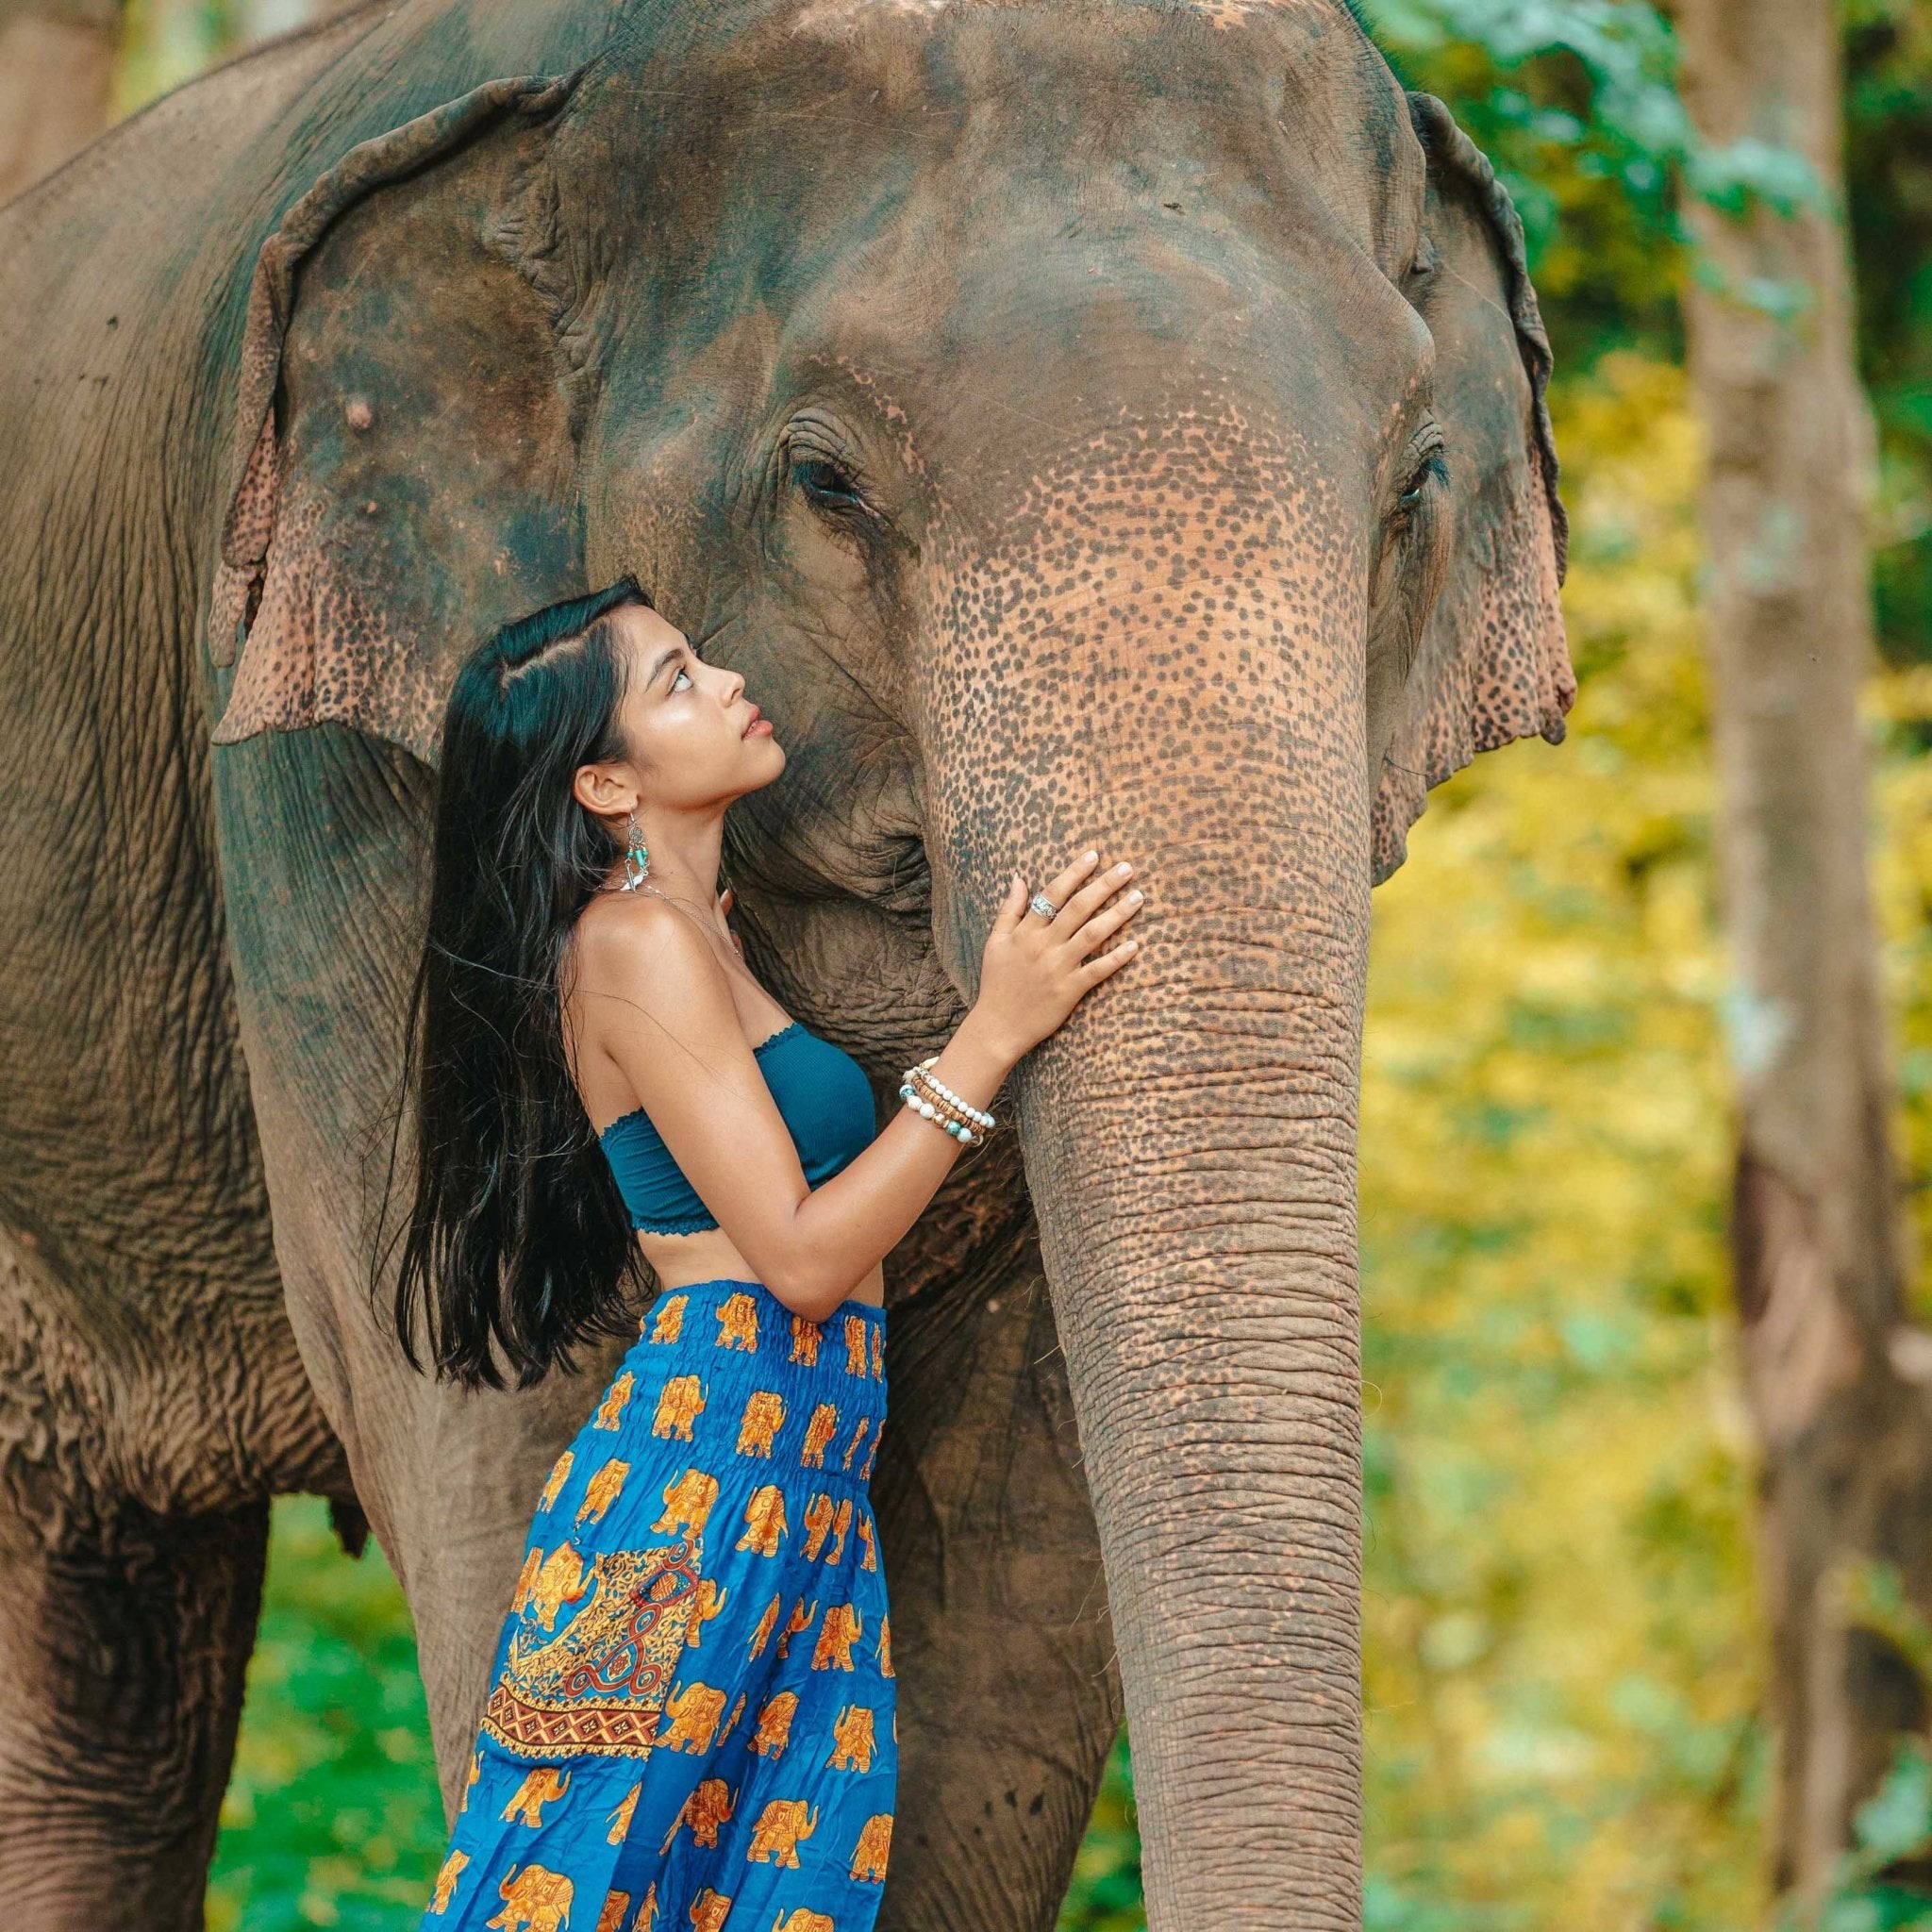 SAVANNA PANTS - Elastic Waist Elepanta Elastic Waist Pants - Buy Today Elephant Pants Jewelry And Bohemian Clothes Handmade In Thailand Help To Save The Elephants FairTrade And Vegan